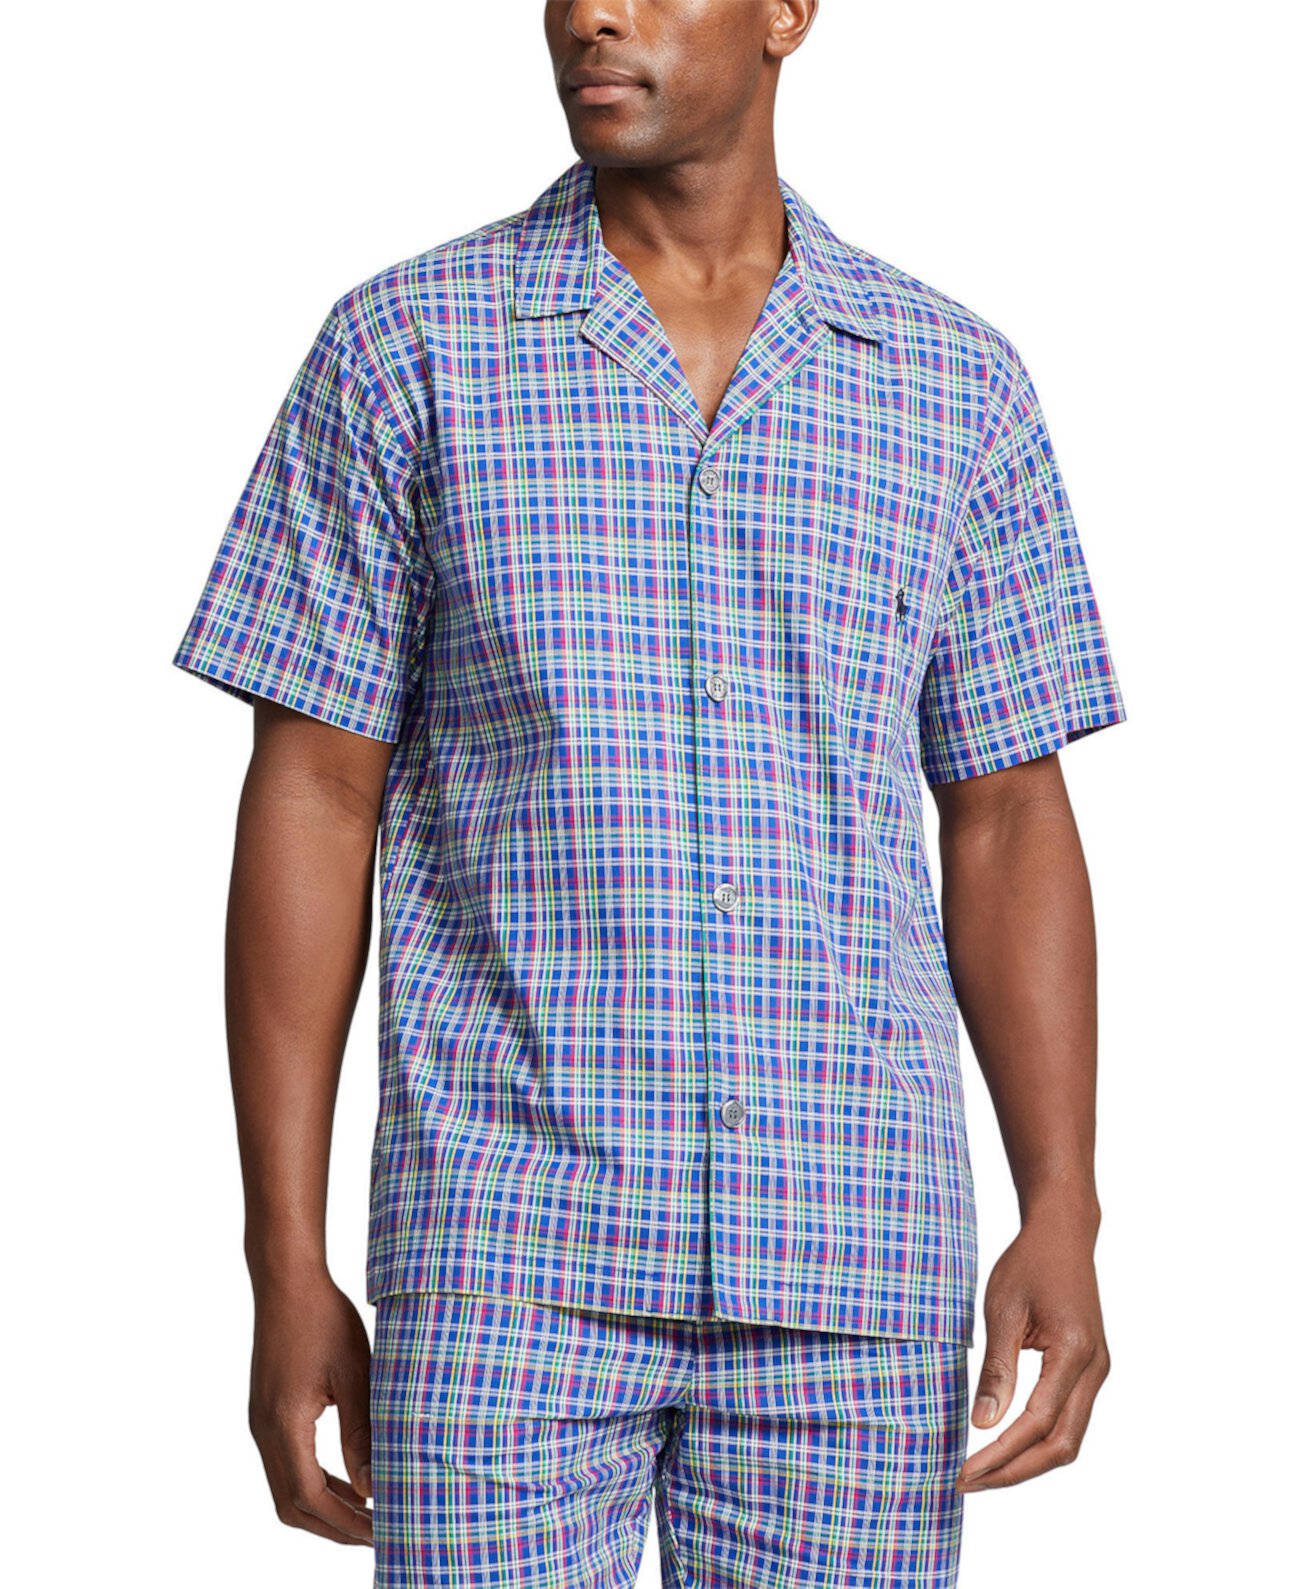 Men's Collared Plaid Sleep Shirt Polo Ralph Lauren